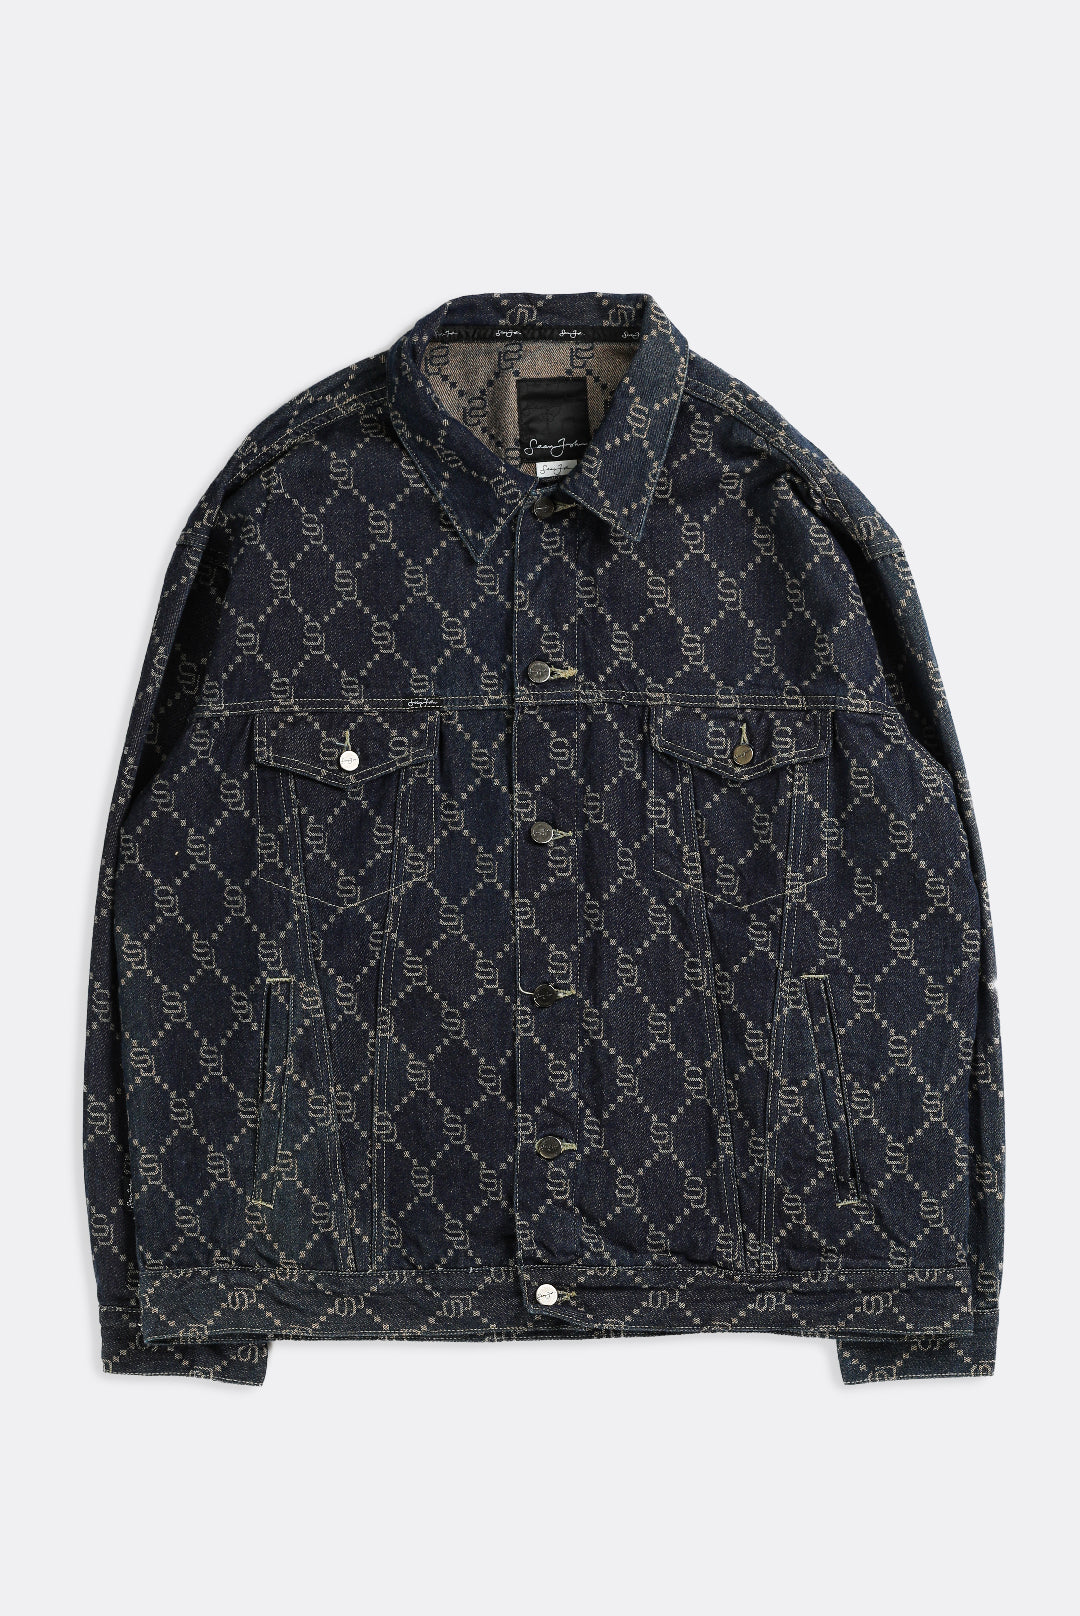 Louis Vuitton Denim Jacket -  Canada